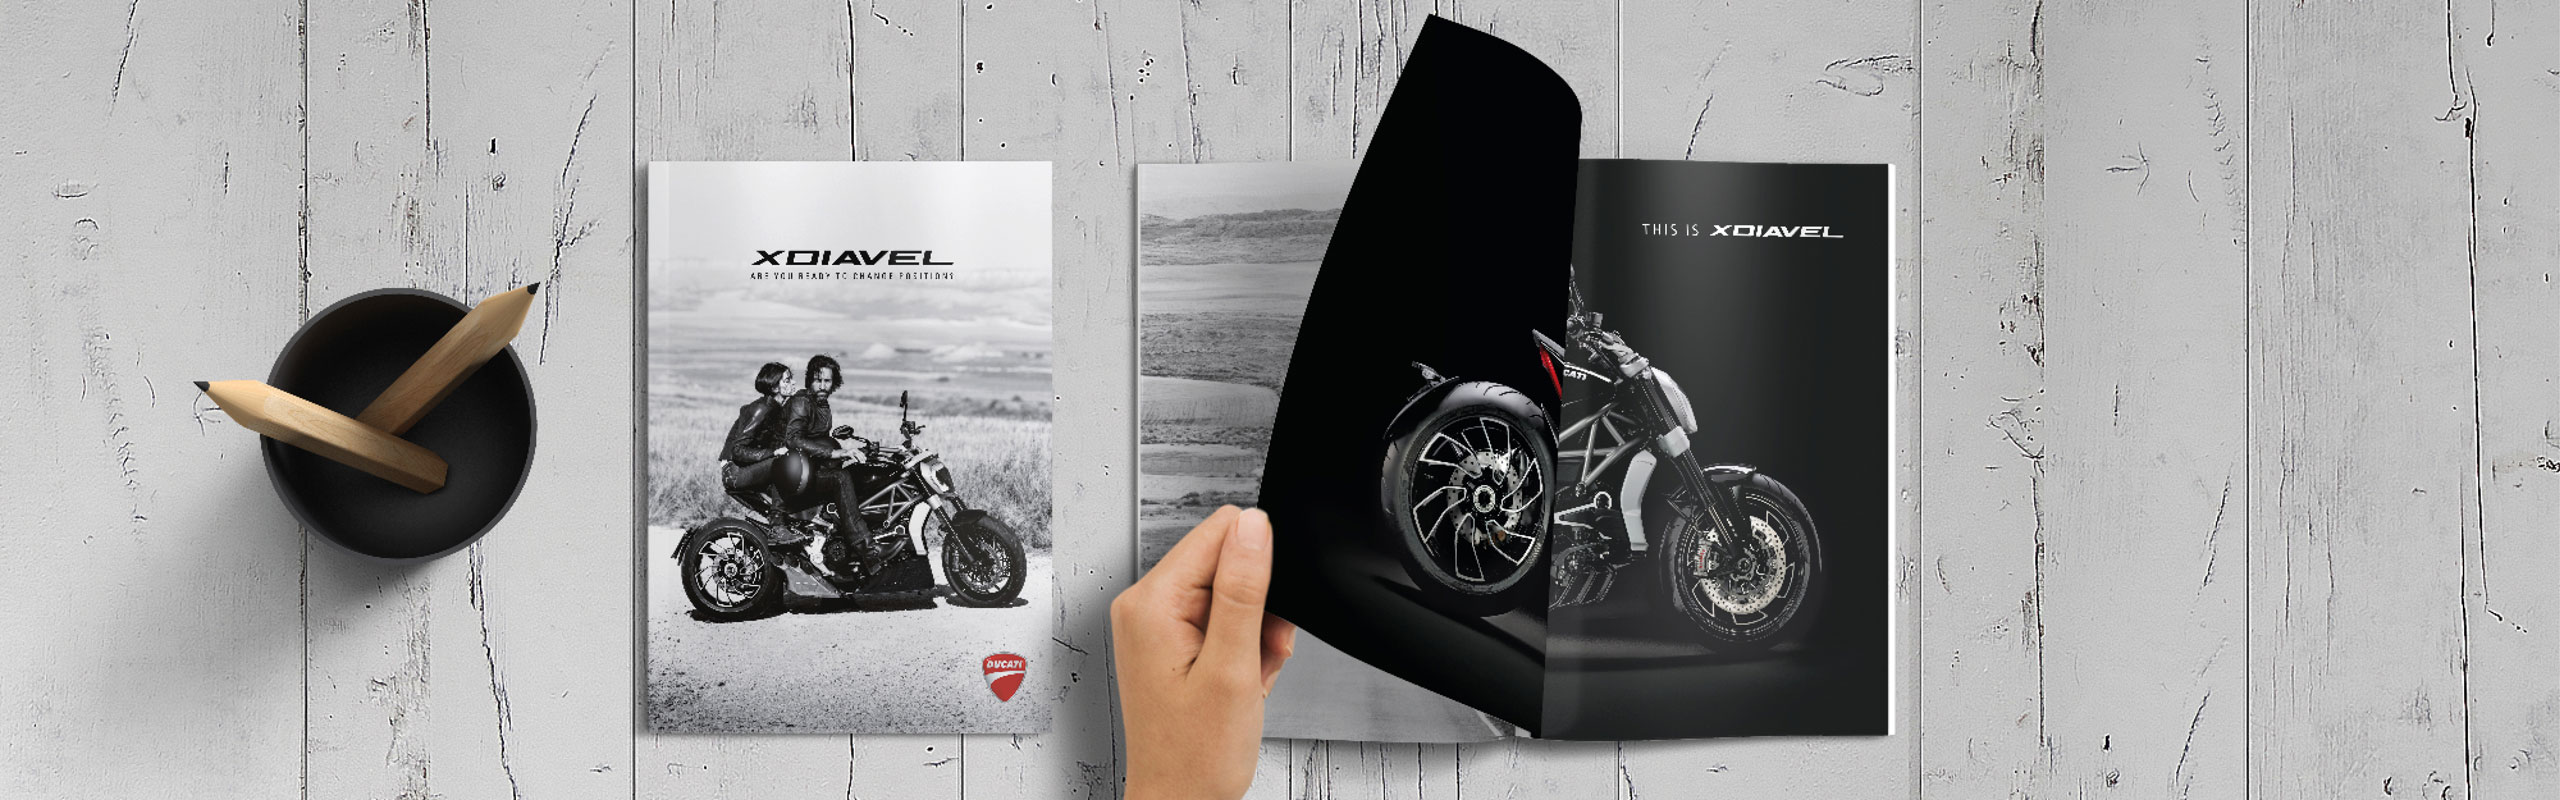 Ducati Brochure Xdiavel Likecube